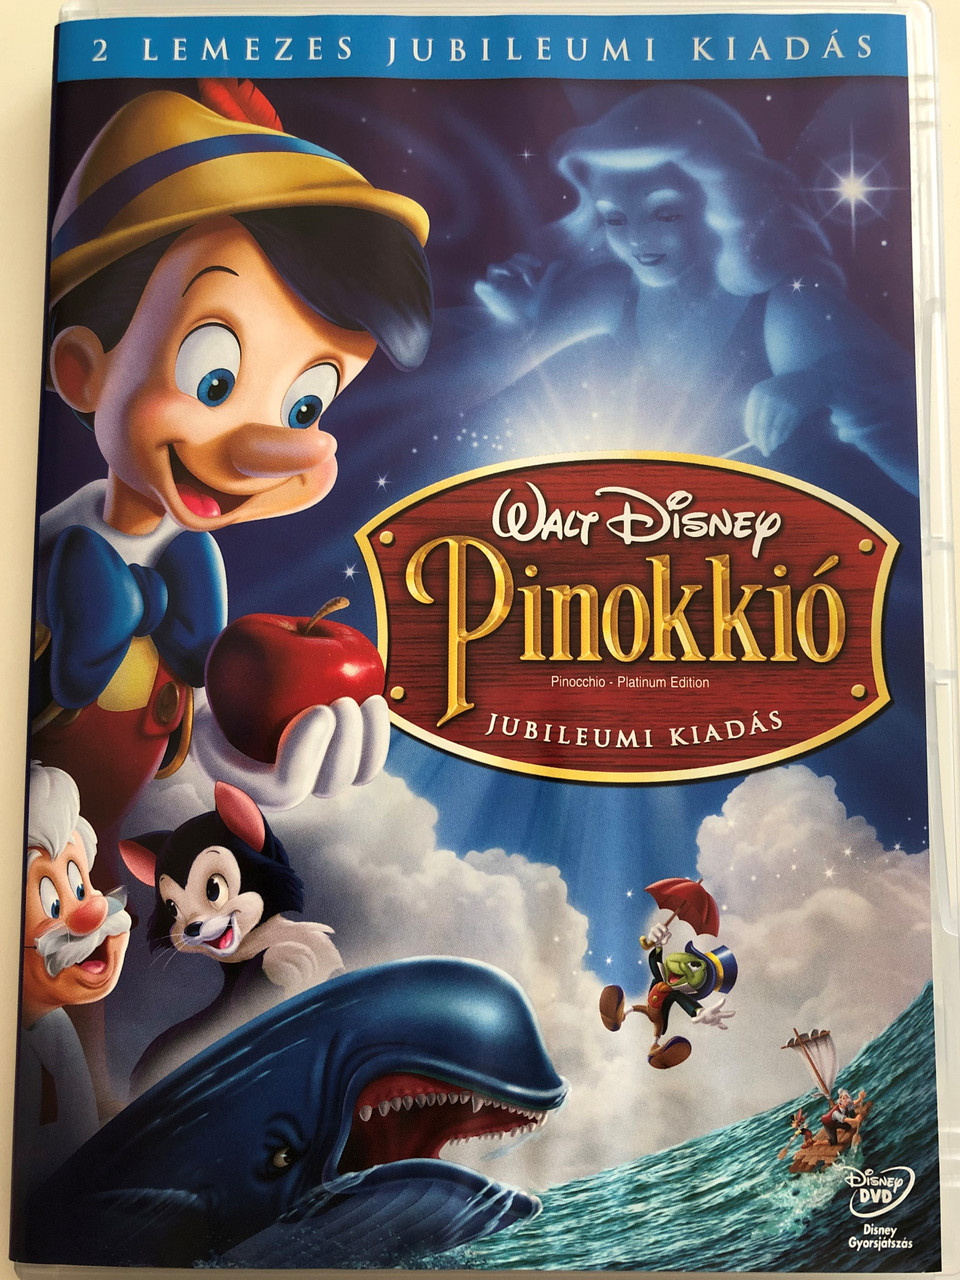 Pinocchio - Platinum edition DVD 1940 Pinokkió Jubileumi kiadás / 2 DVD  edition / Directed by Ben Sharpsteen, Hamilton Luske / Starring: Cliff  Edwards, Dickie Jones, Christian Rub, Mel Blanc - bibleinmylanguage